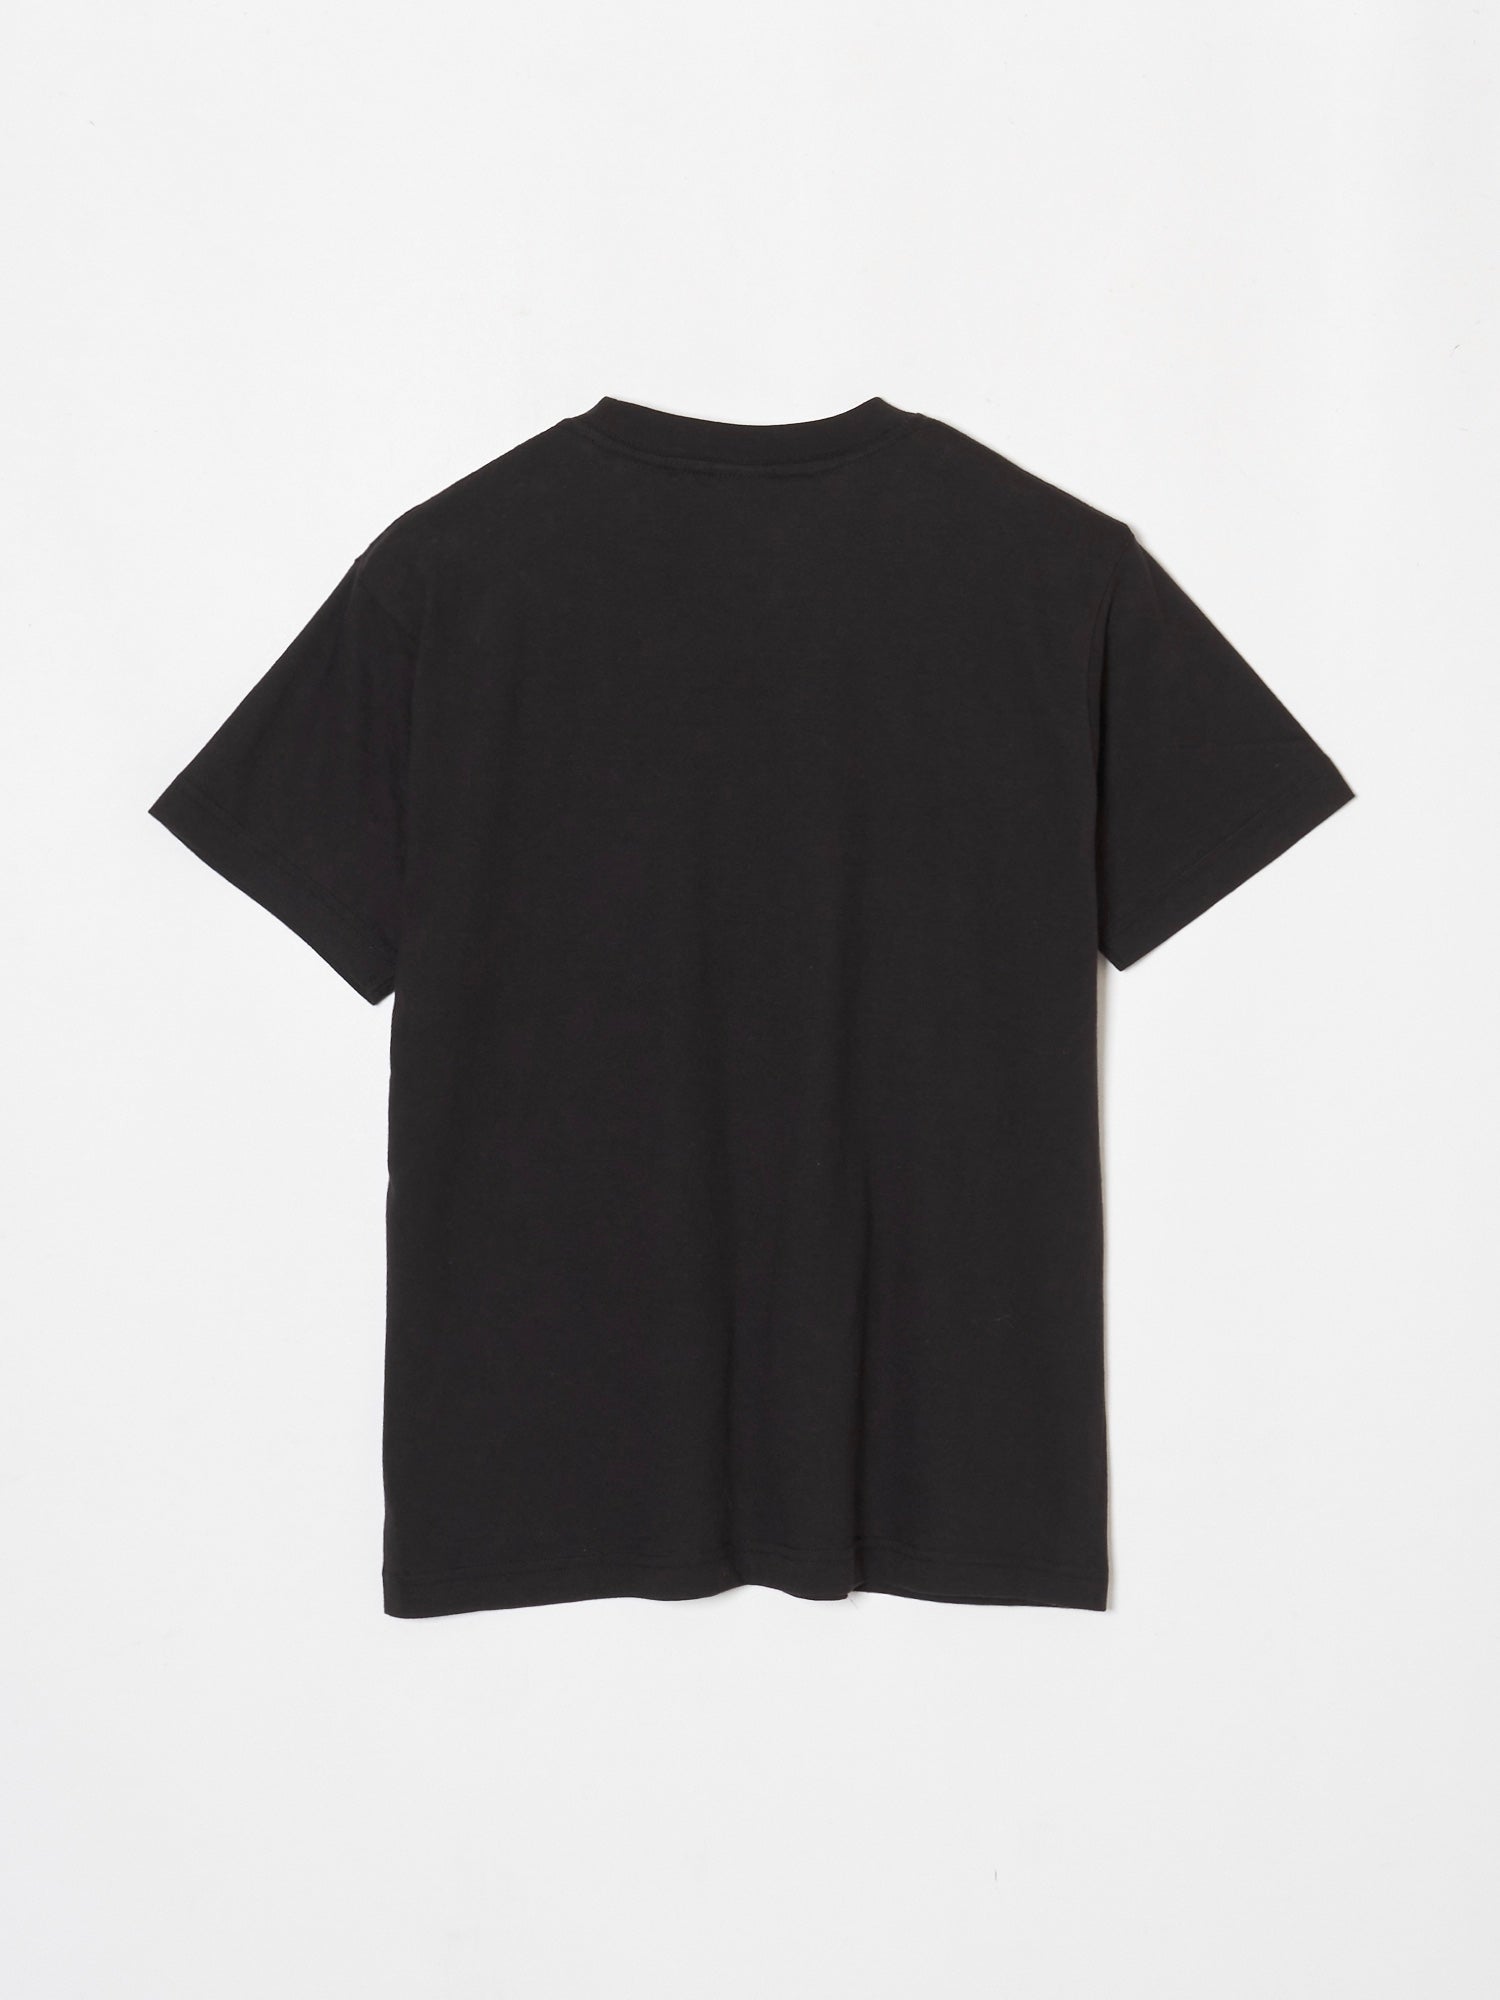 袖丈半袖tanakadaisuke IZAYOI T-shirt Black 01